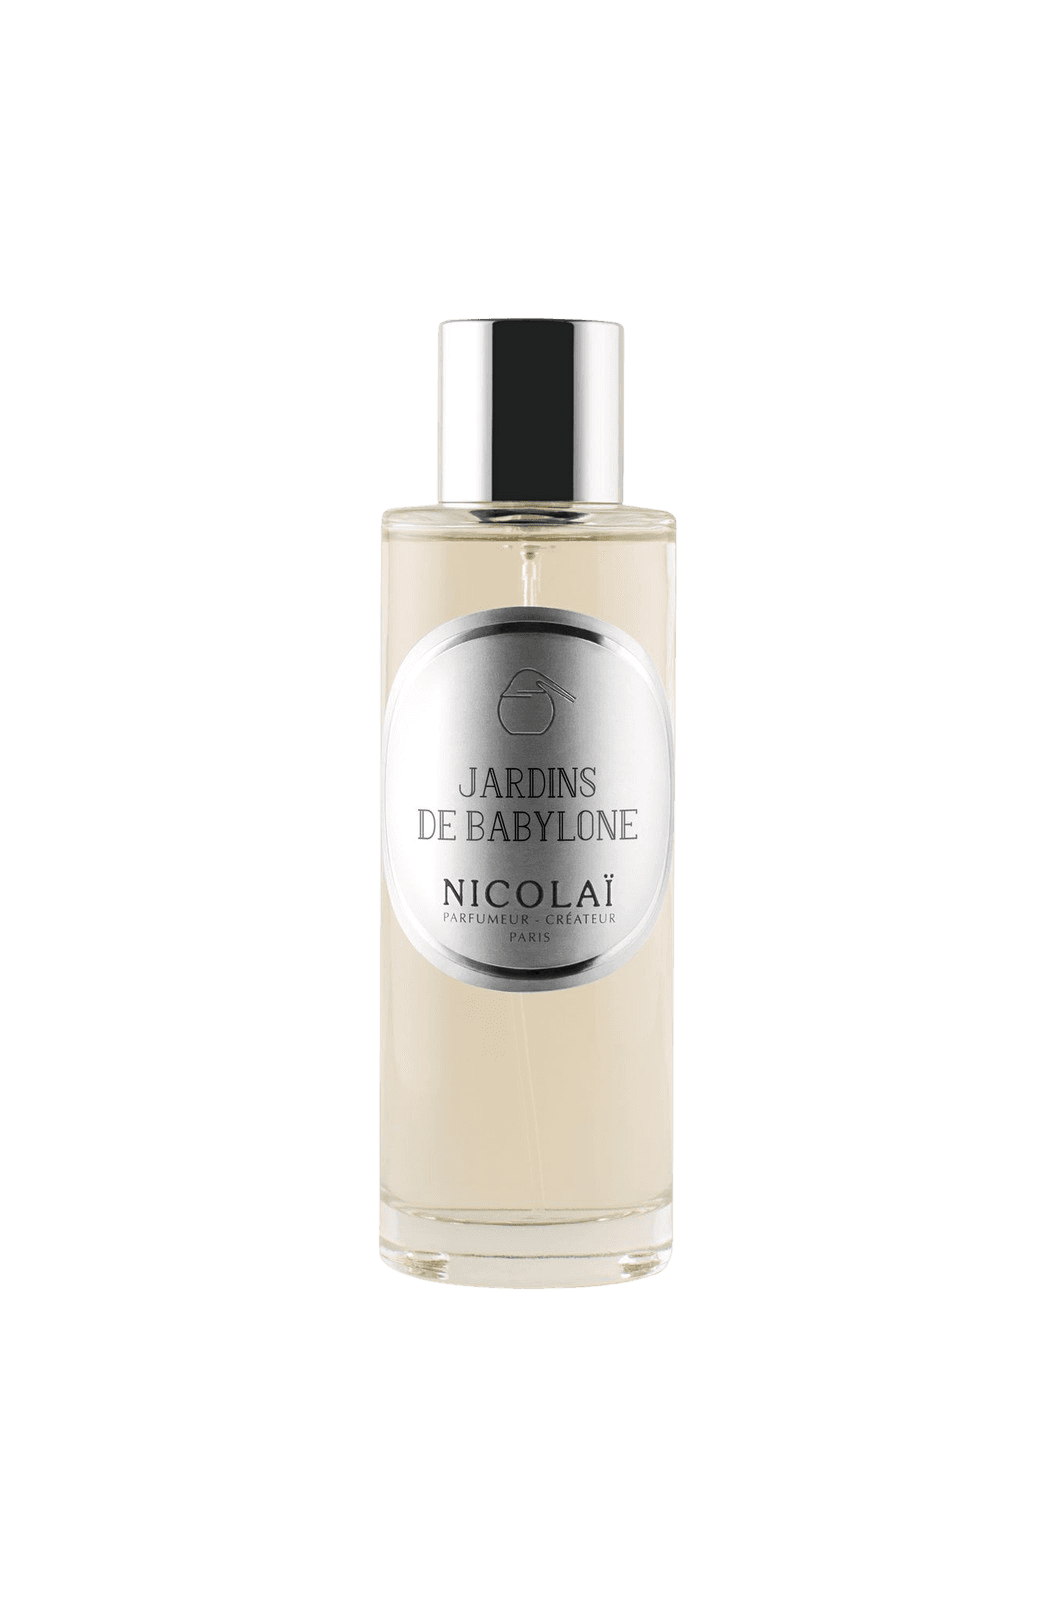 Nicolai Jardins de Babylone Roomspray | Perfume Lounge